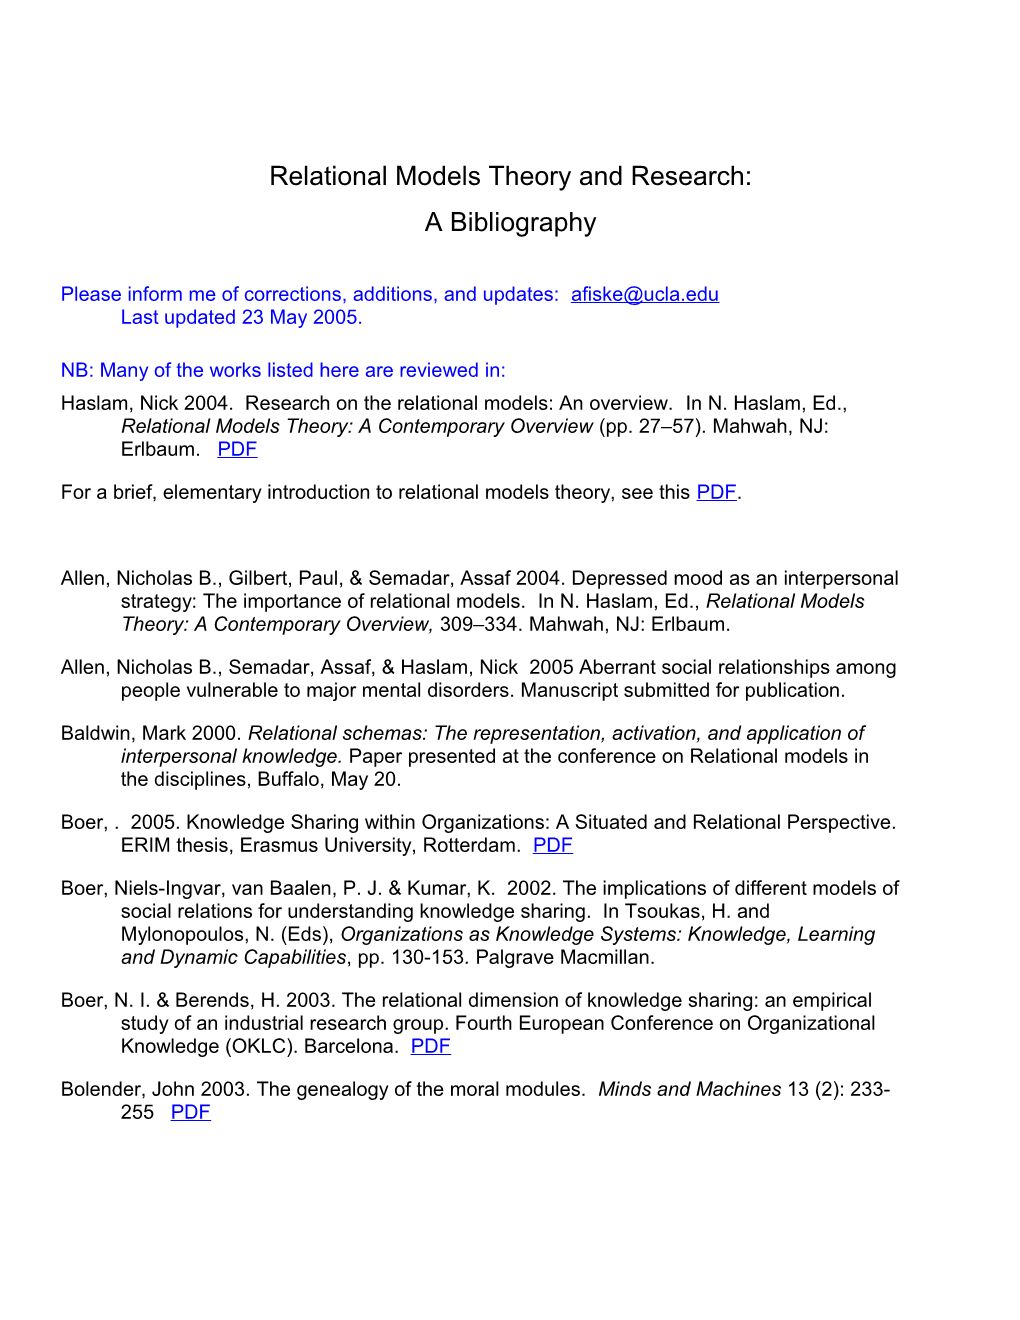 Relational Models Bibliography